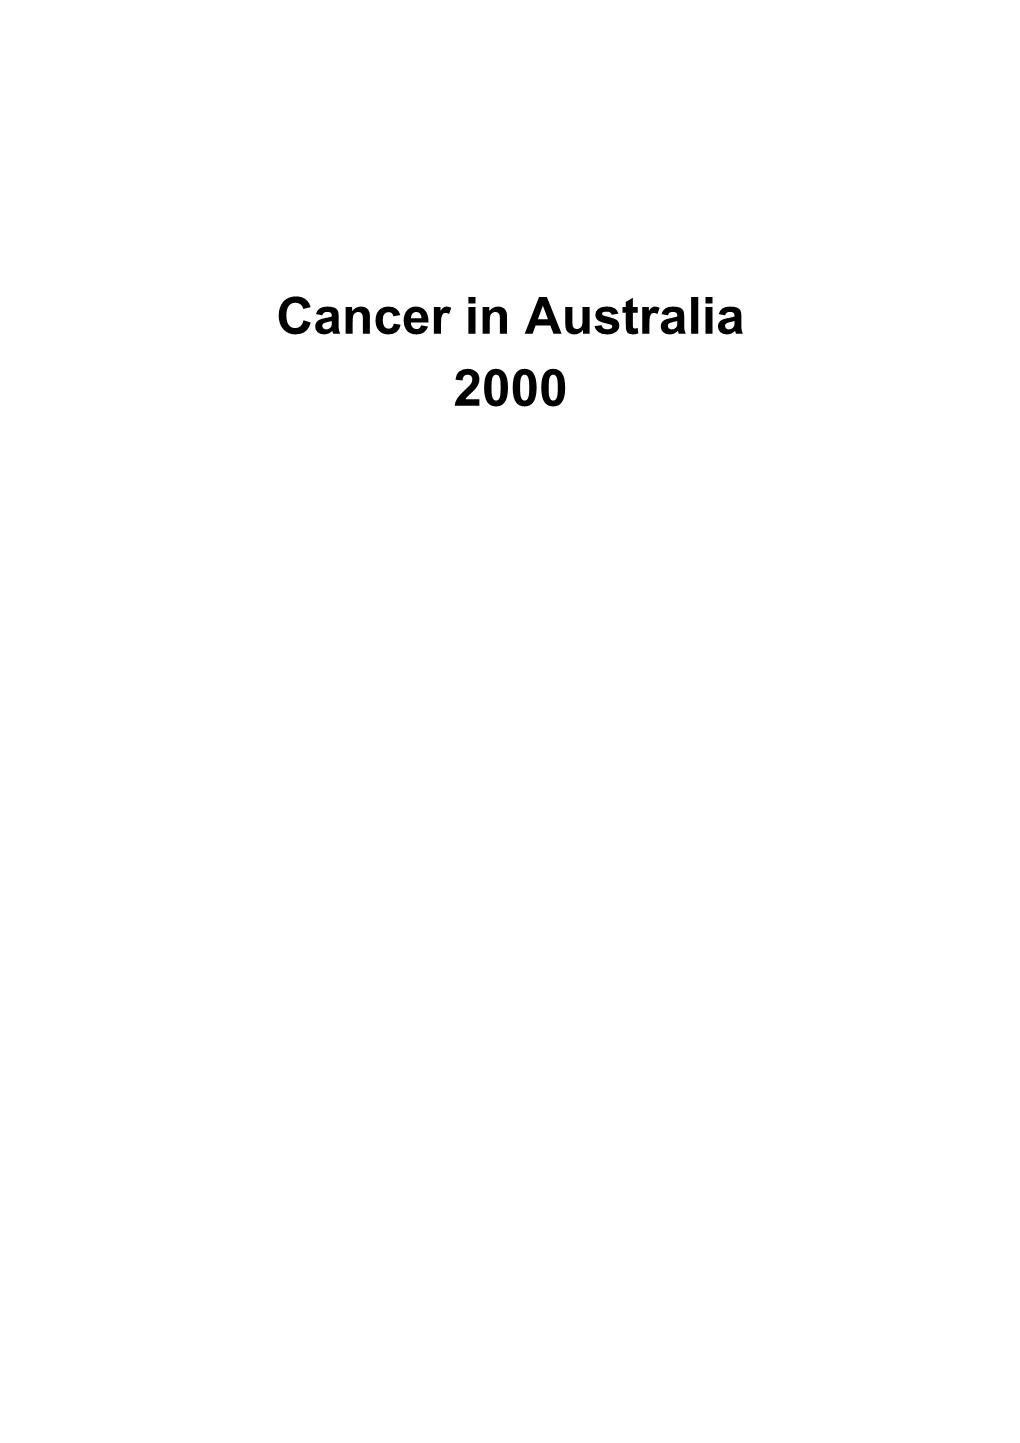 Cancer in Australia 2000 (Full Publication) (AIHW)